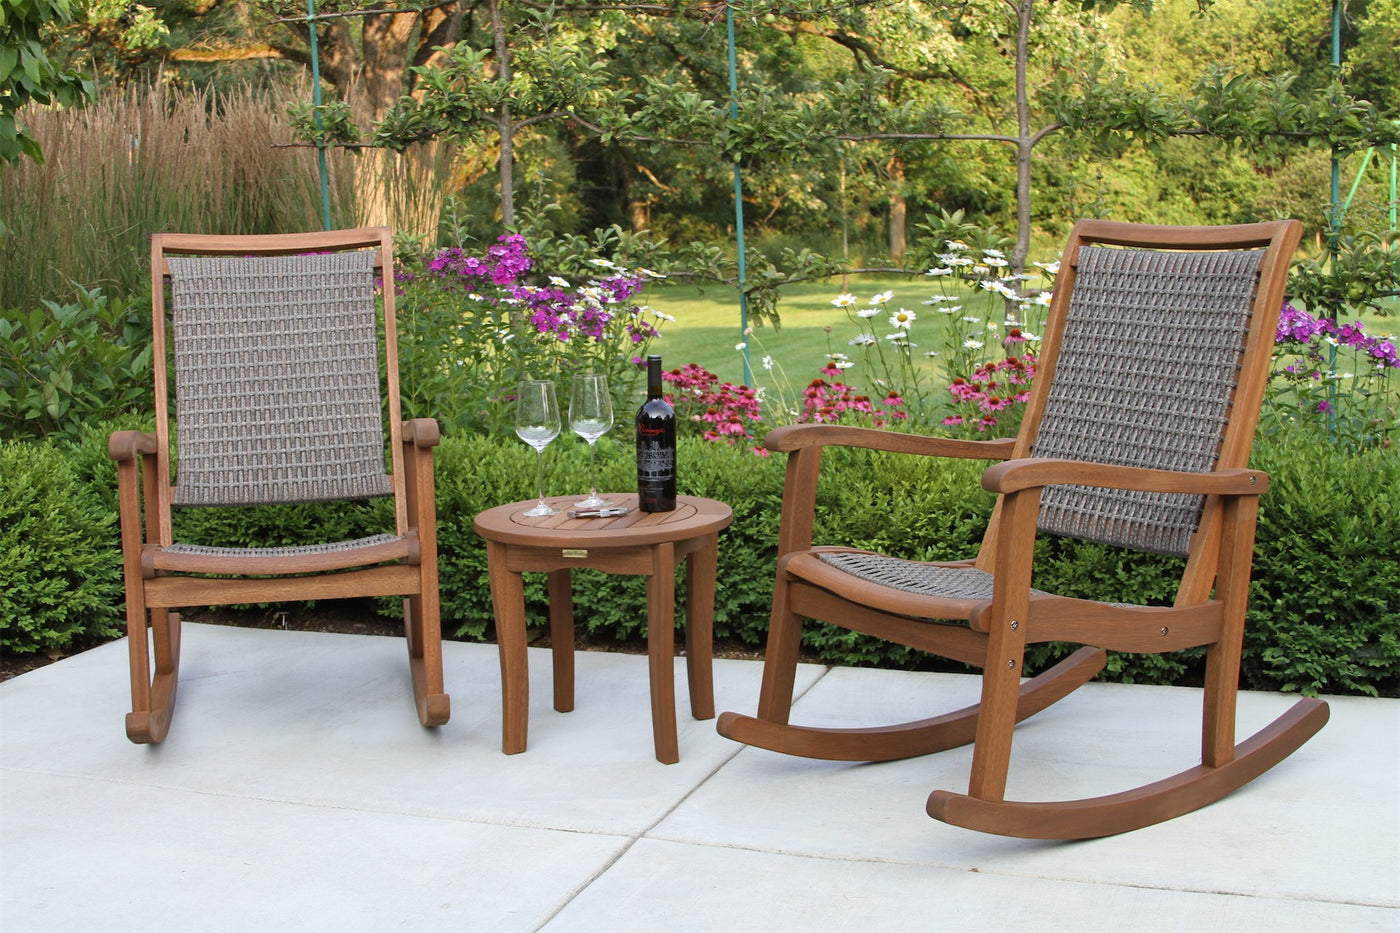 Outdoor Interiors Grey Wicker and Eucalyptus Outdoor Rocking Chair - $150